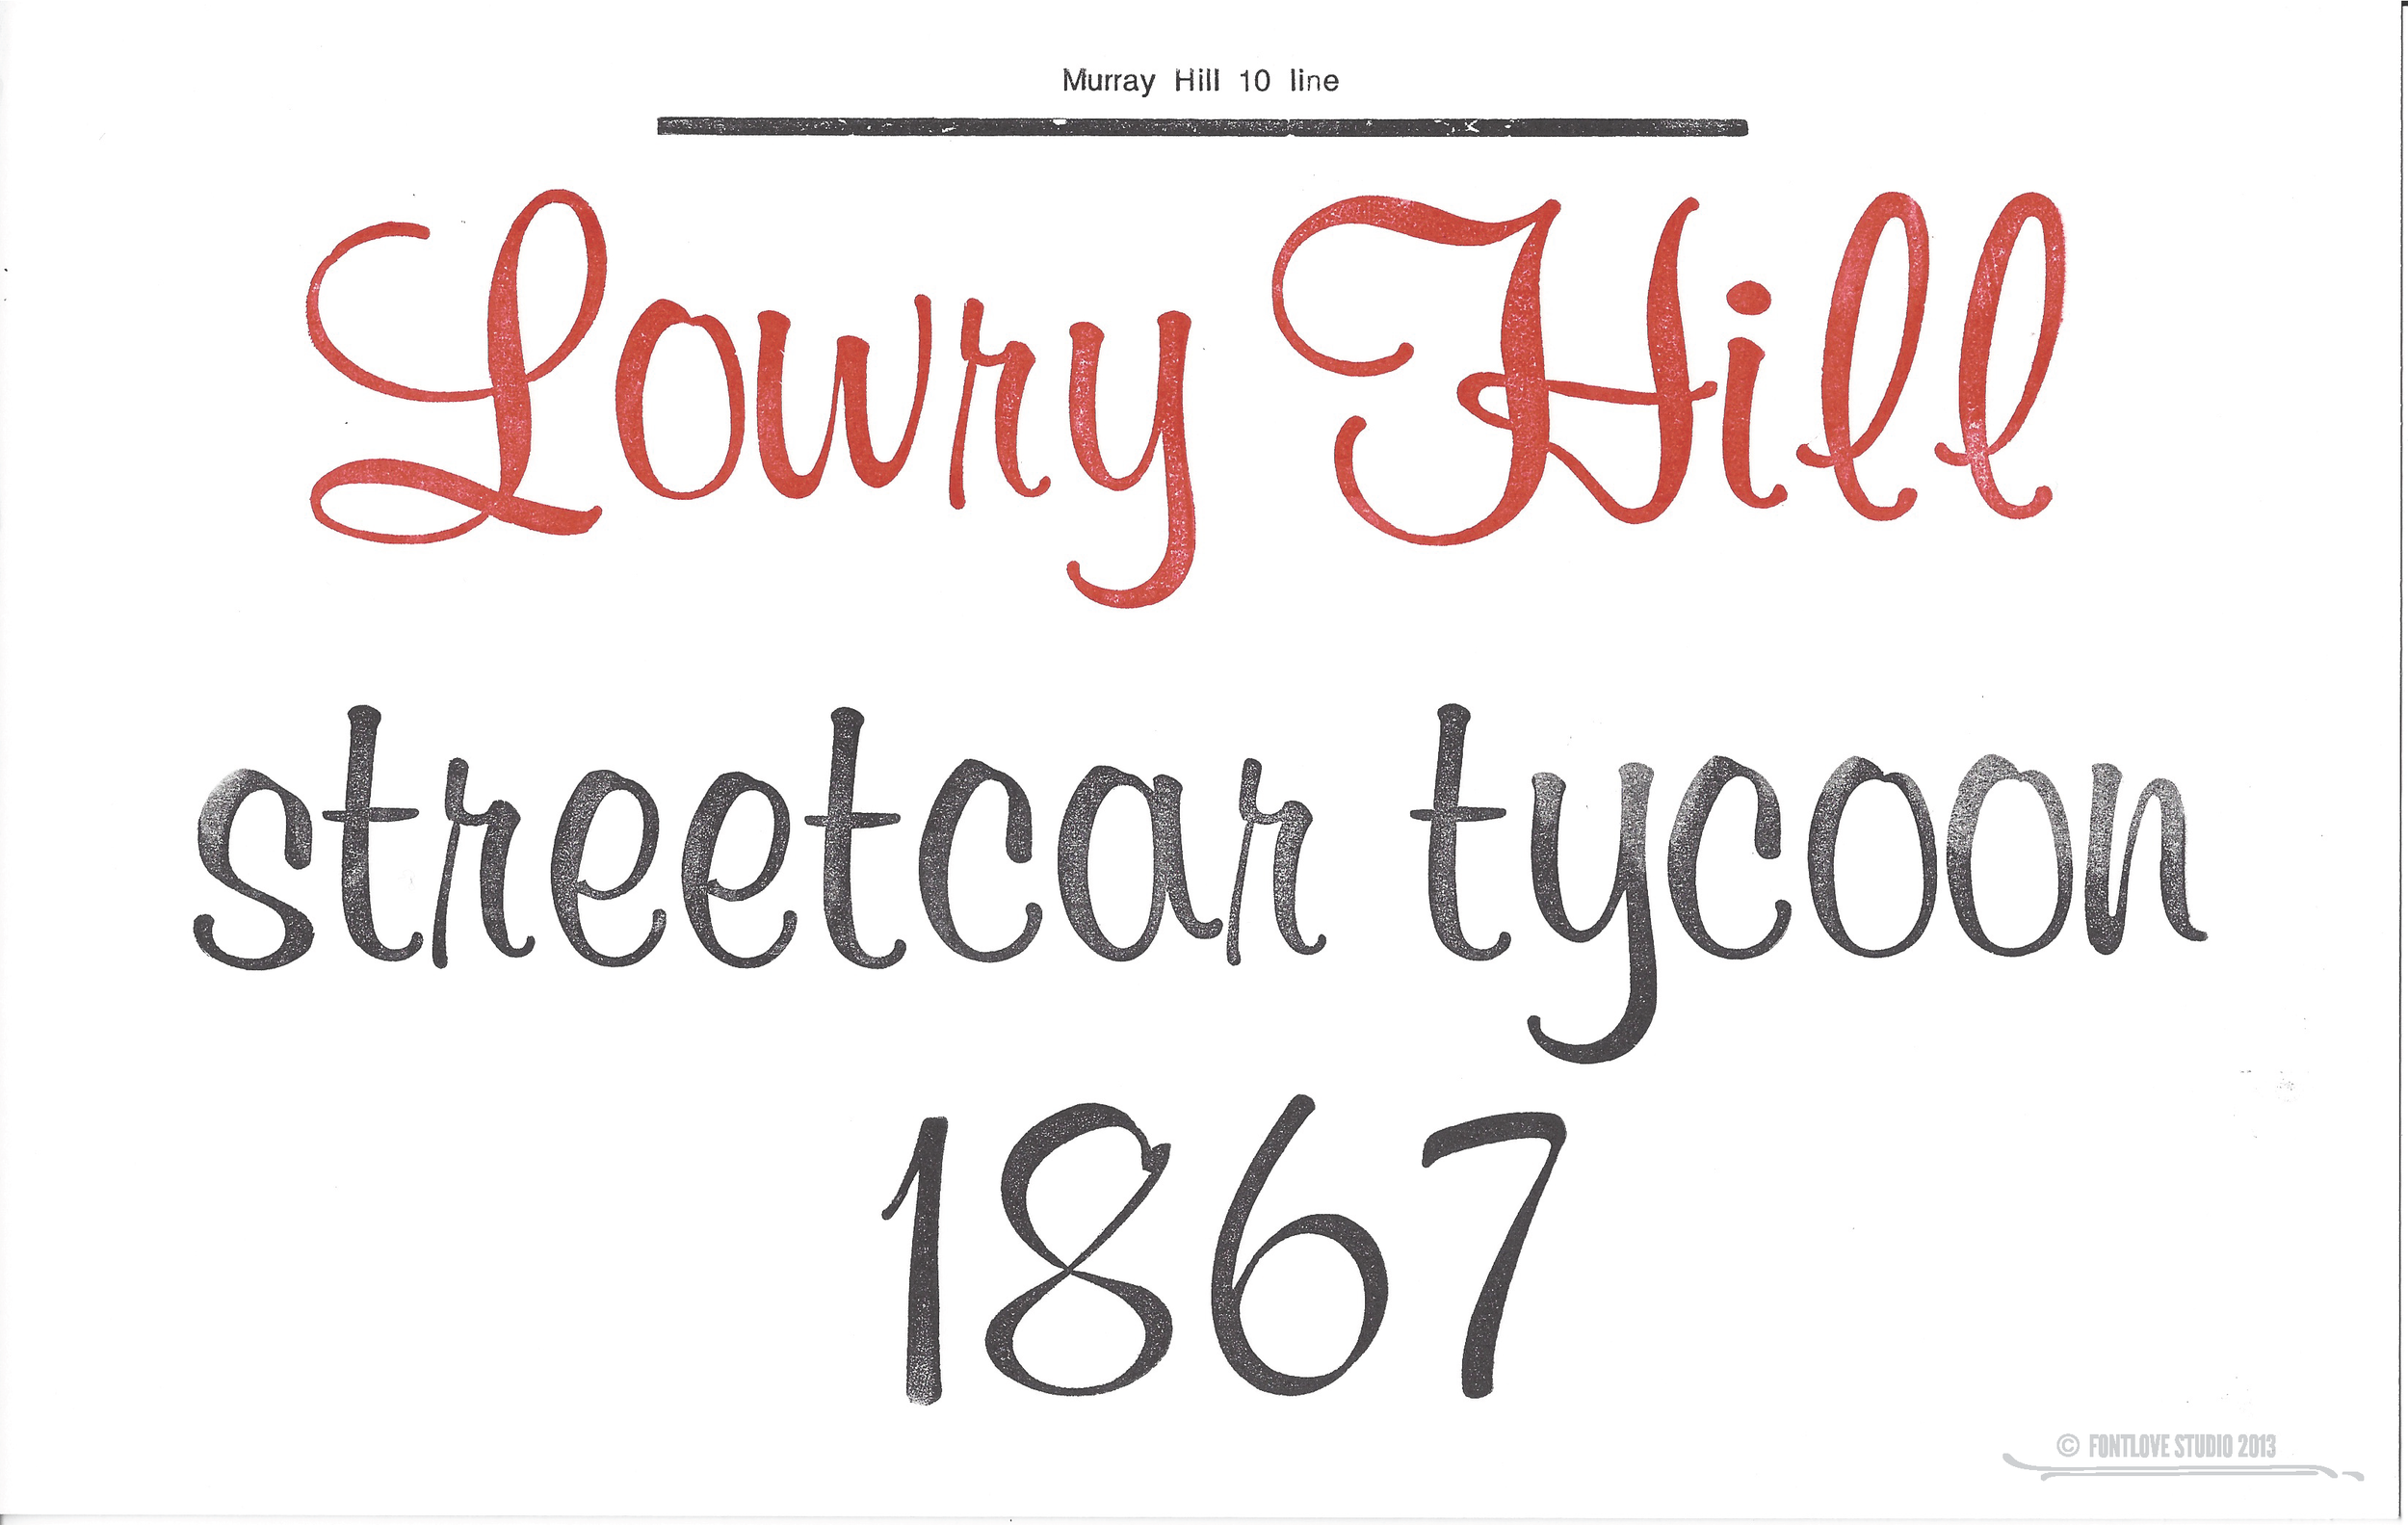 20th Century Futura Ultrabold Extended New Letterpress Type 14pt 